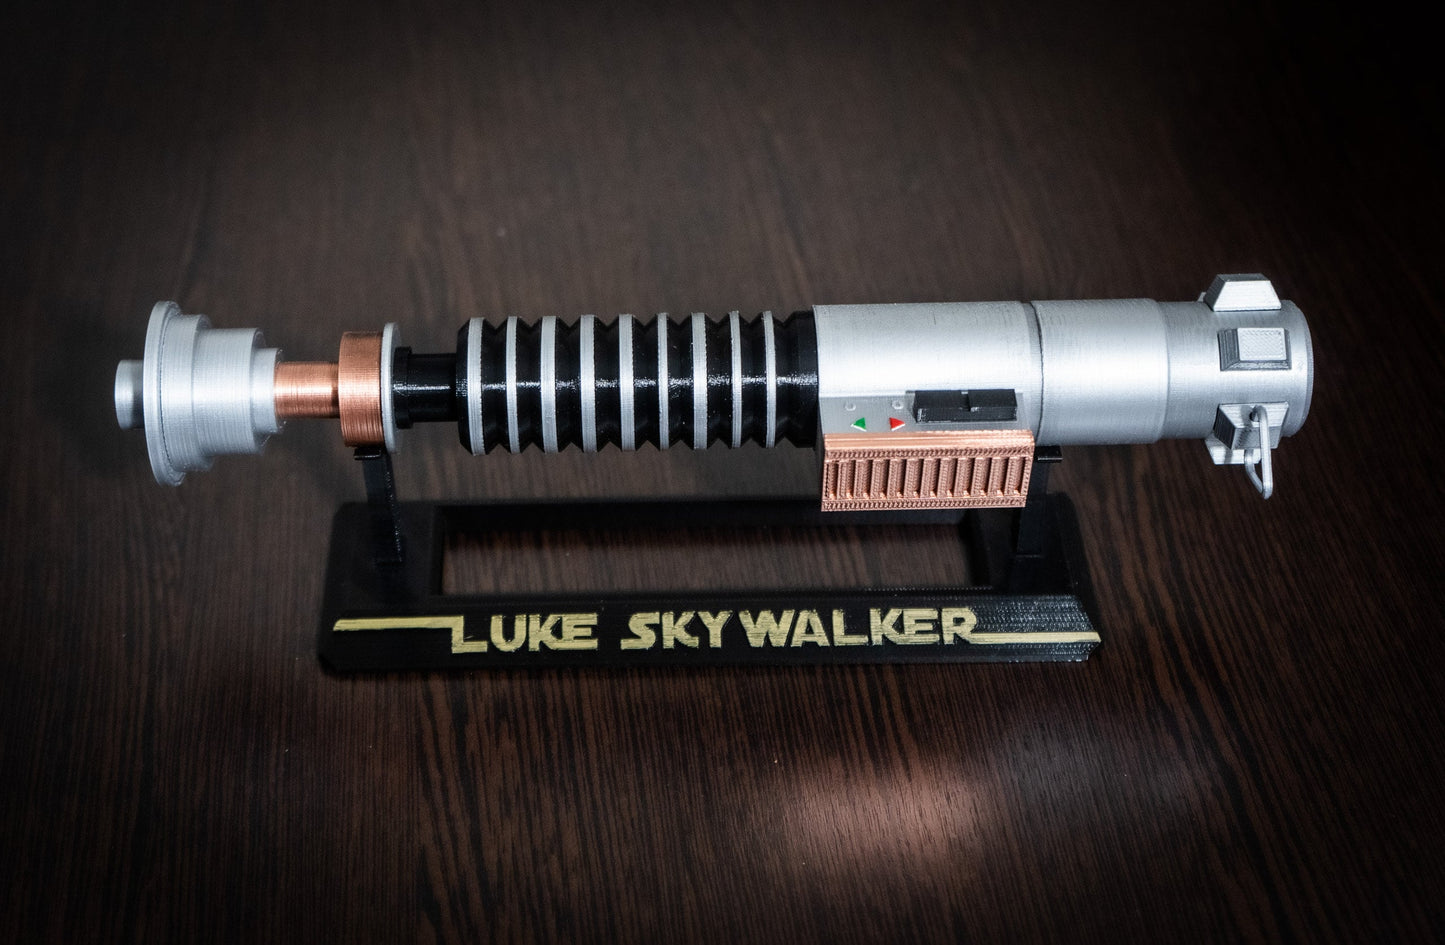 Luke Skywalker lightsaber hilt | Star Wars cosplay custom lightsaber replica | Star Wars gift - 3DPrintProps